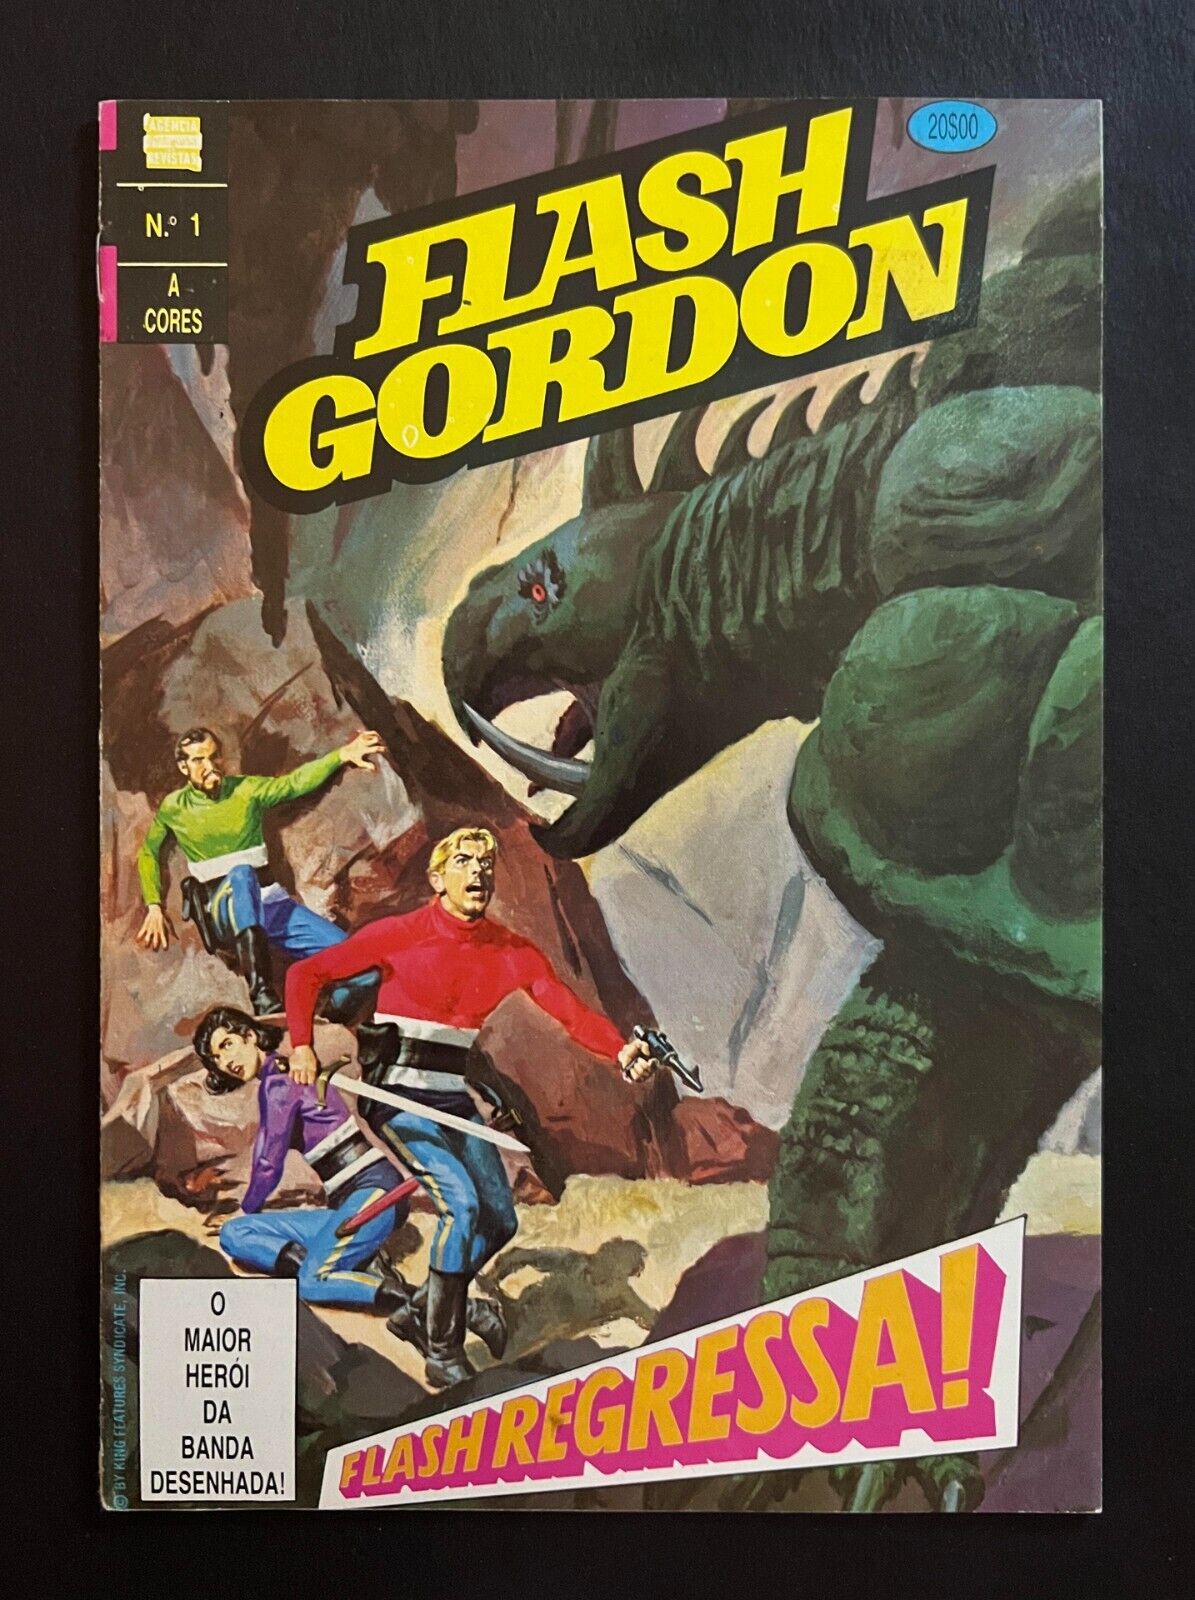 FLASH GORDON #1 Hi-Grade Portuguese w/Poster Alex Raymond King Features 1980